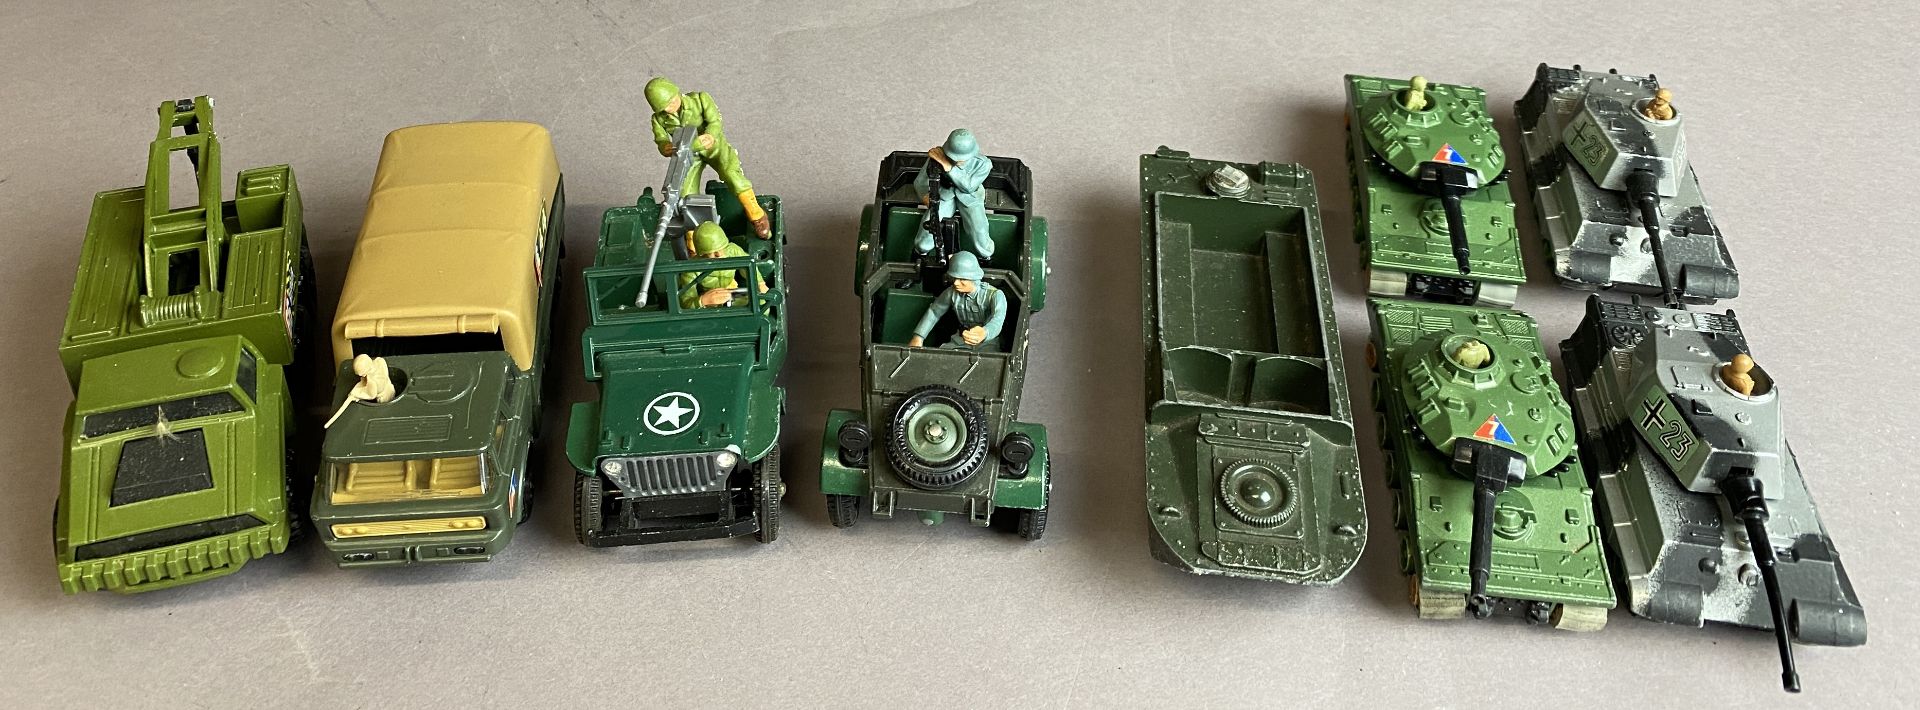 Nine assorted metal model military vehicles including Kubelwagen Jeep,